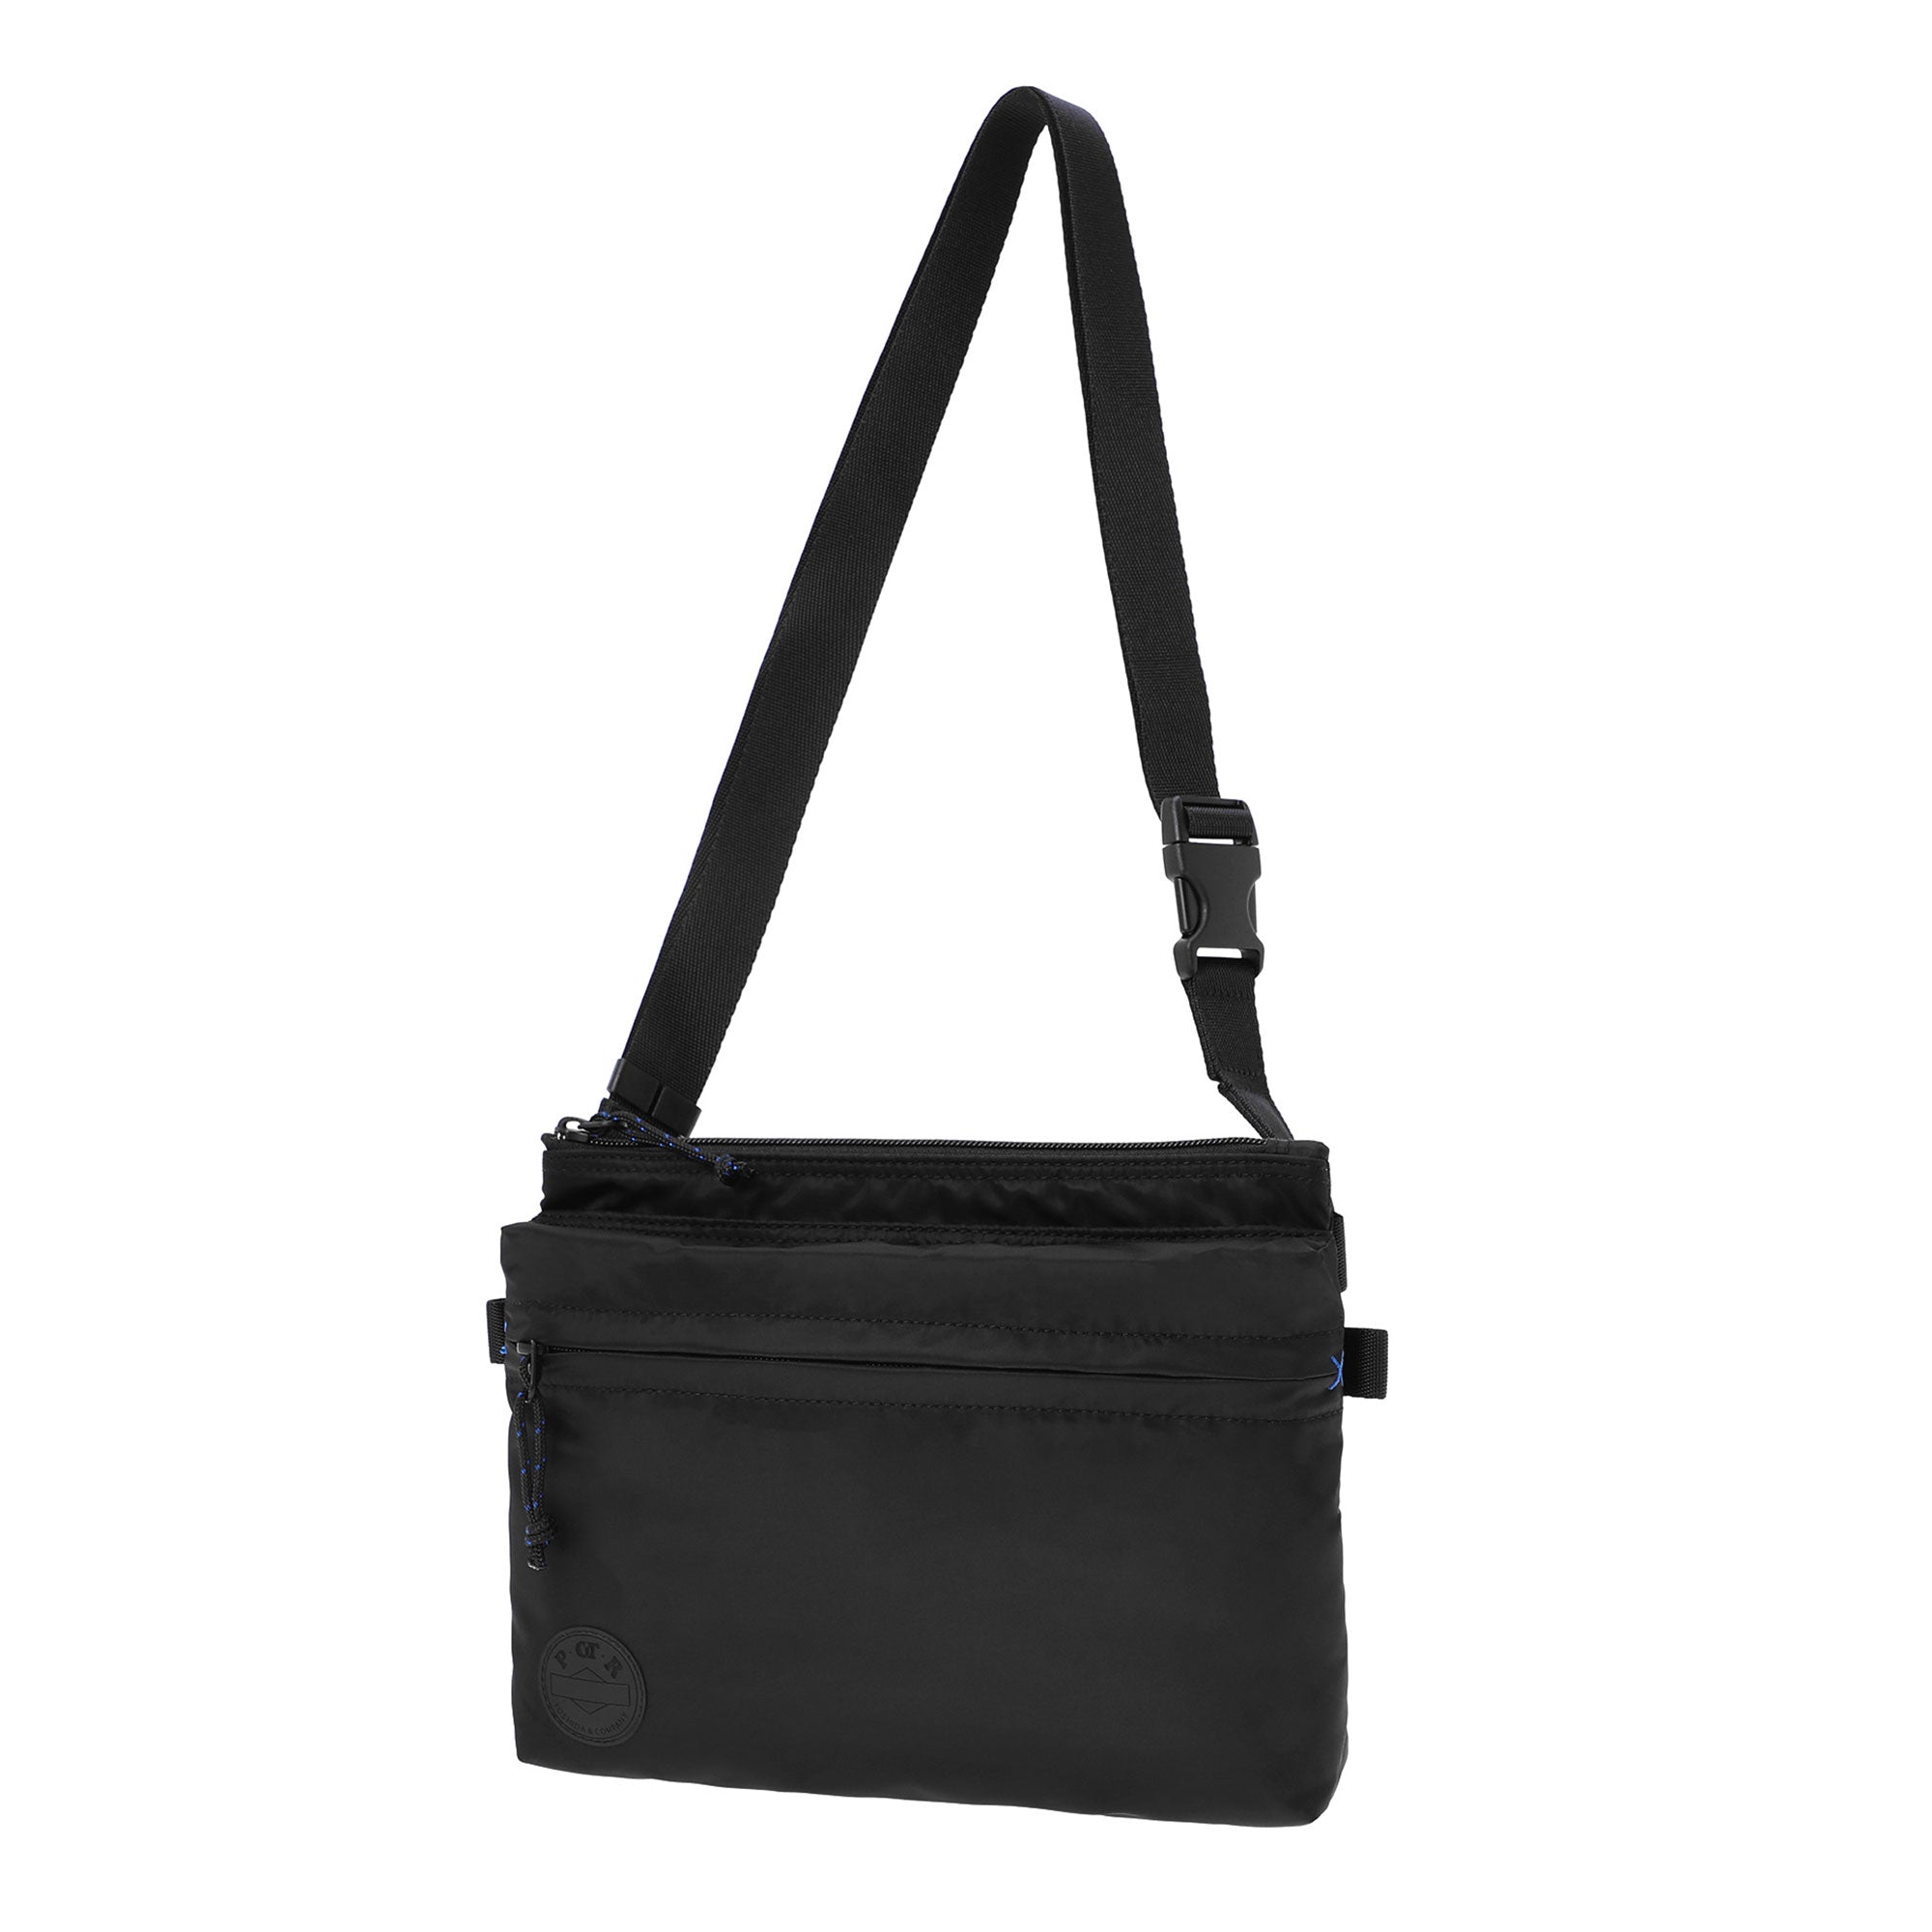 POTR - Packs Strool Bag - (Black) view 1